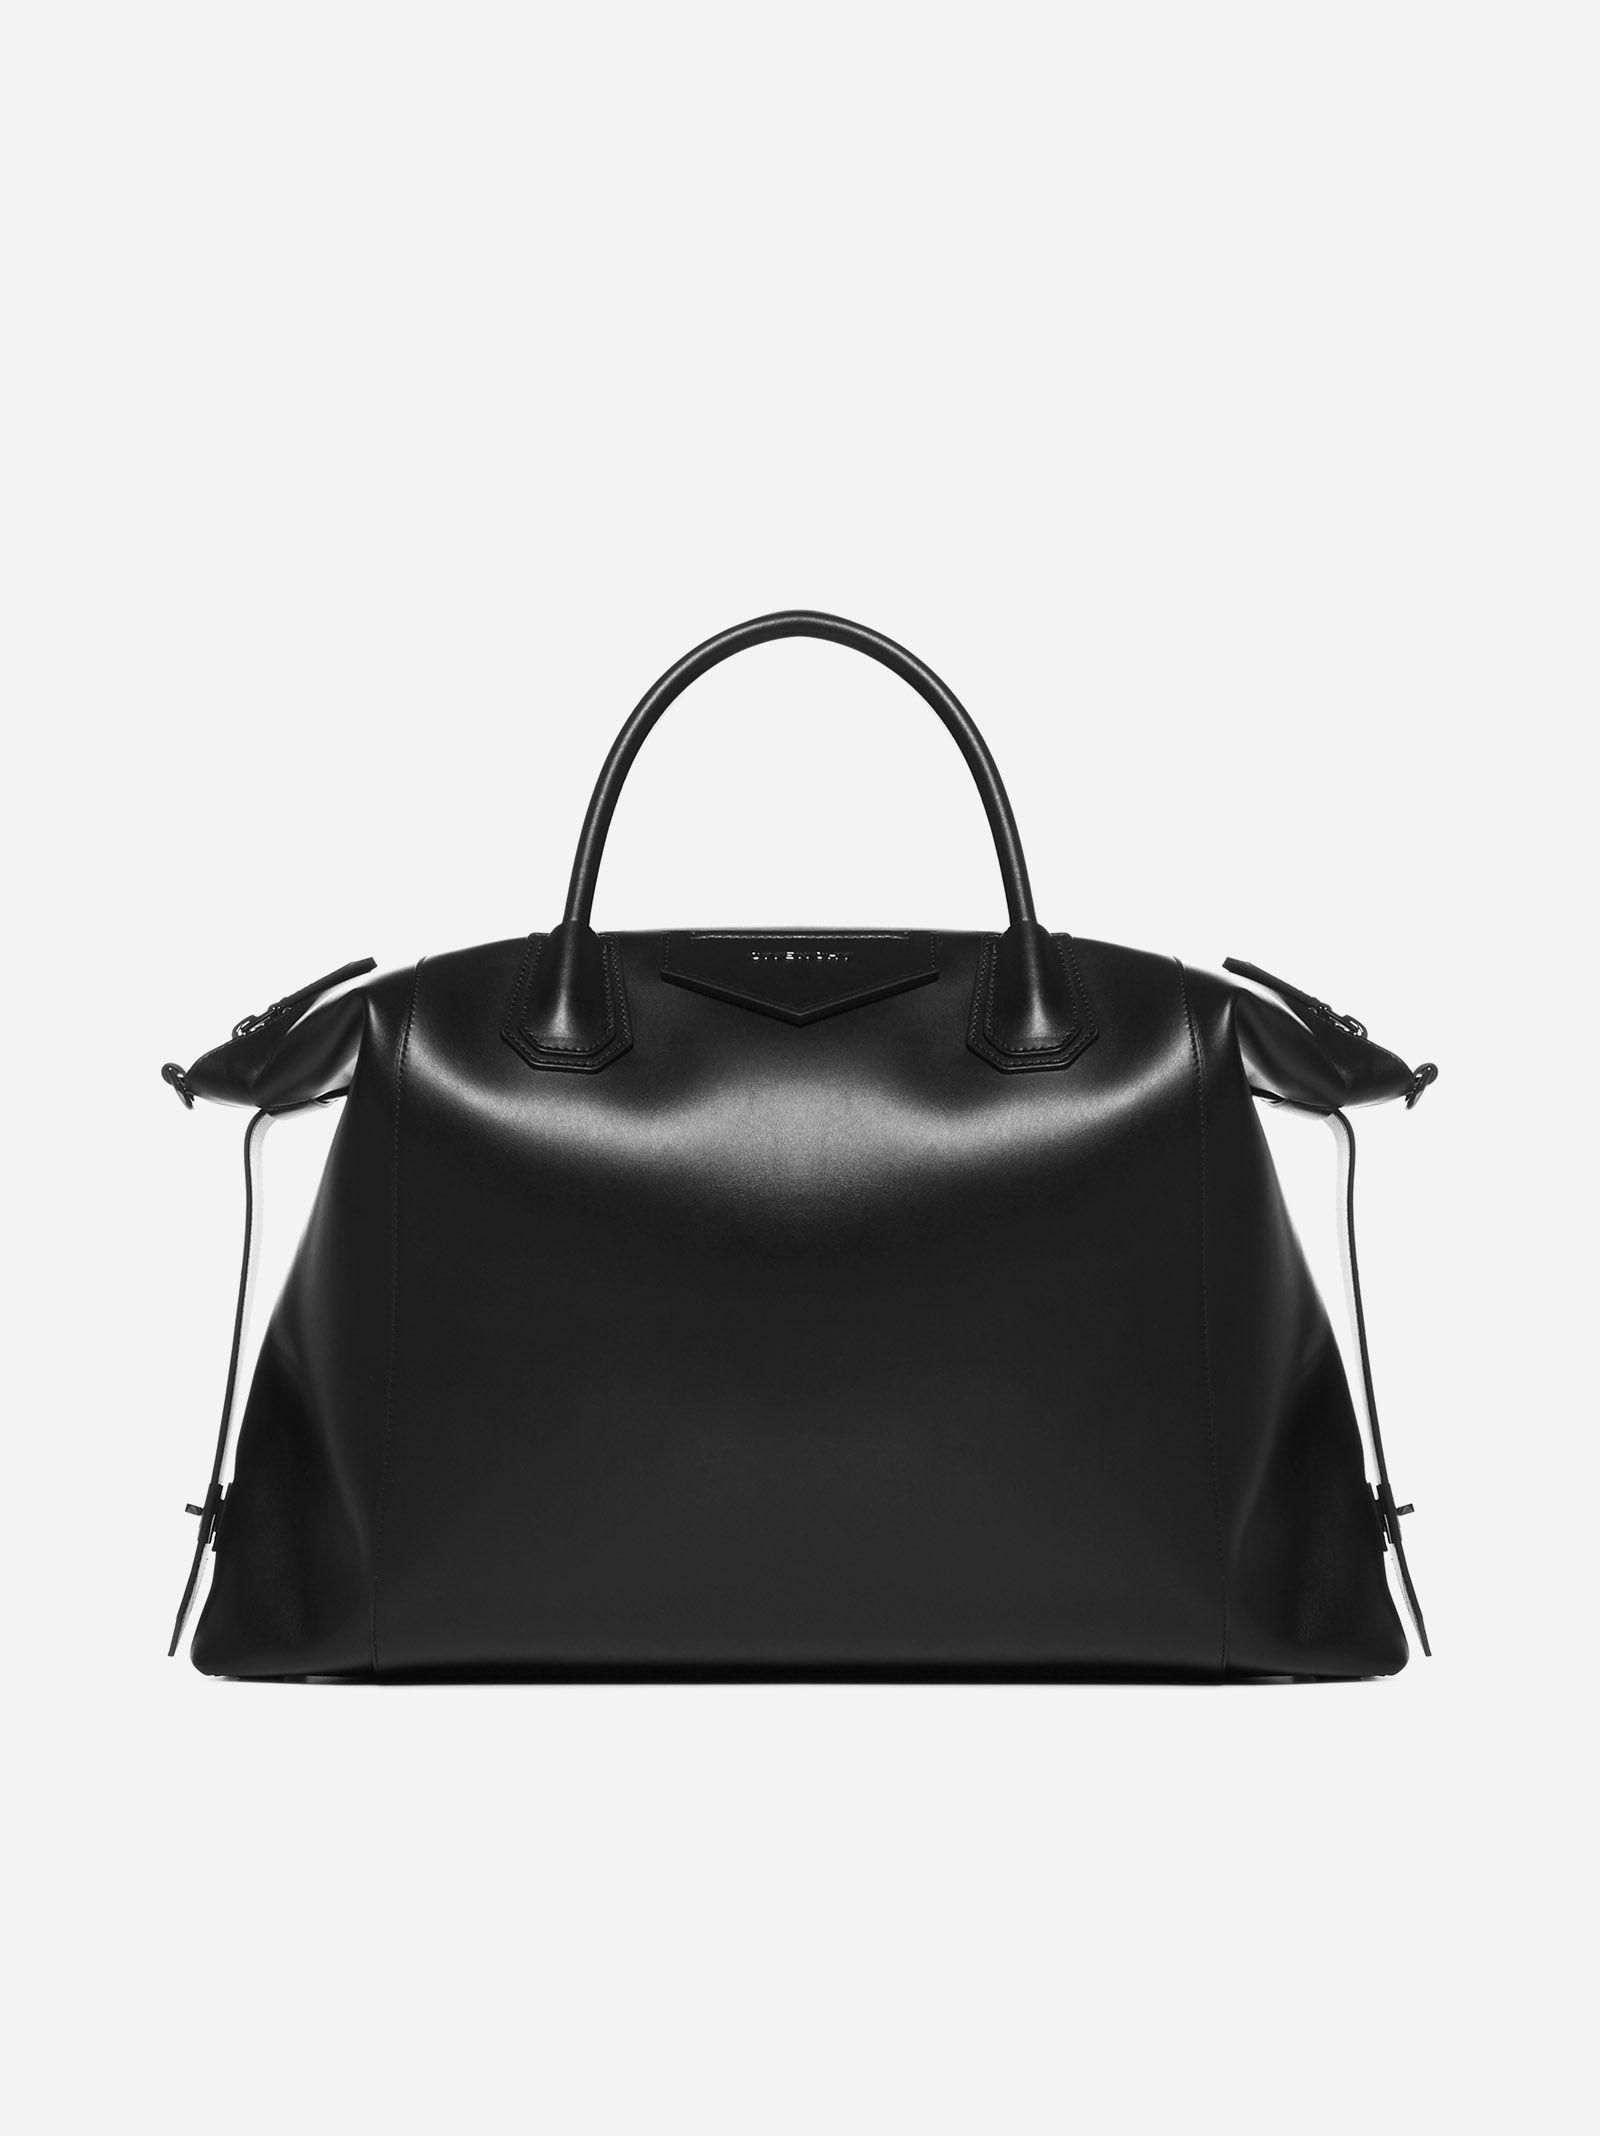 Givenchy Antigona Soft Large Leather Tote Bag in Black for Men - Lyst